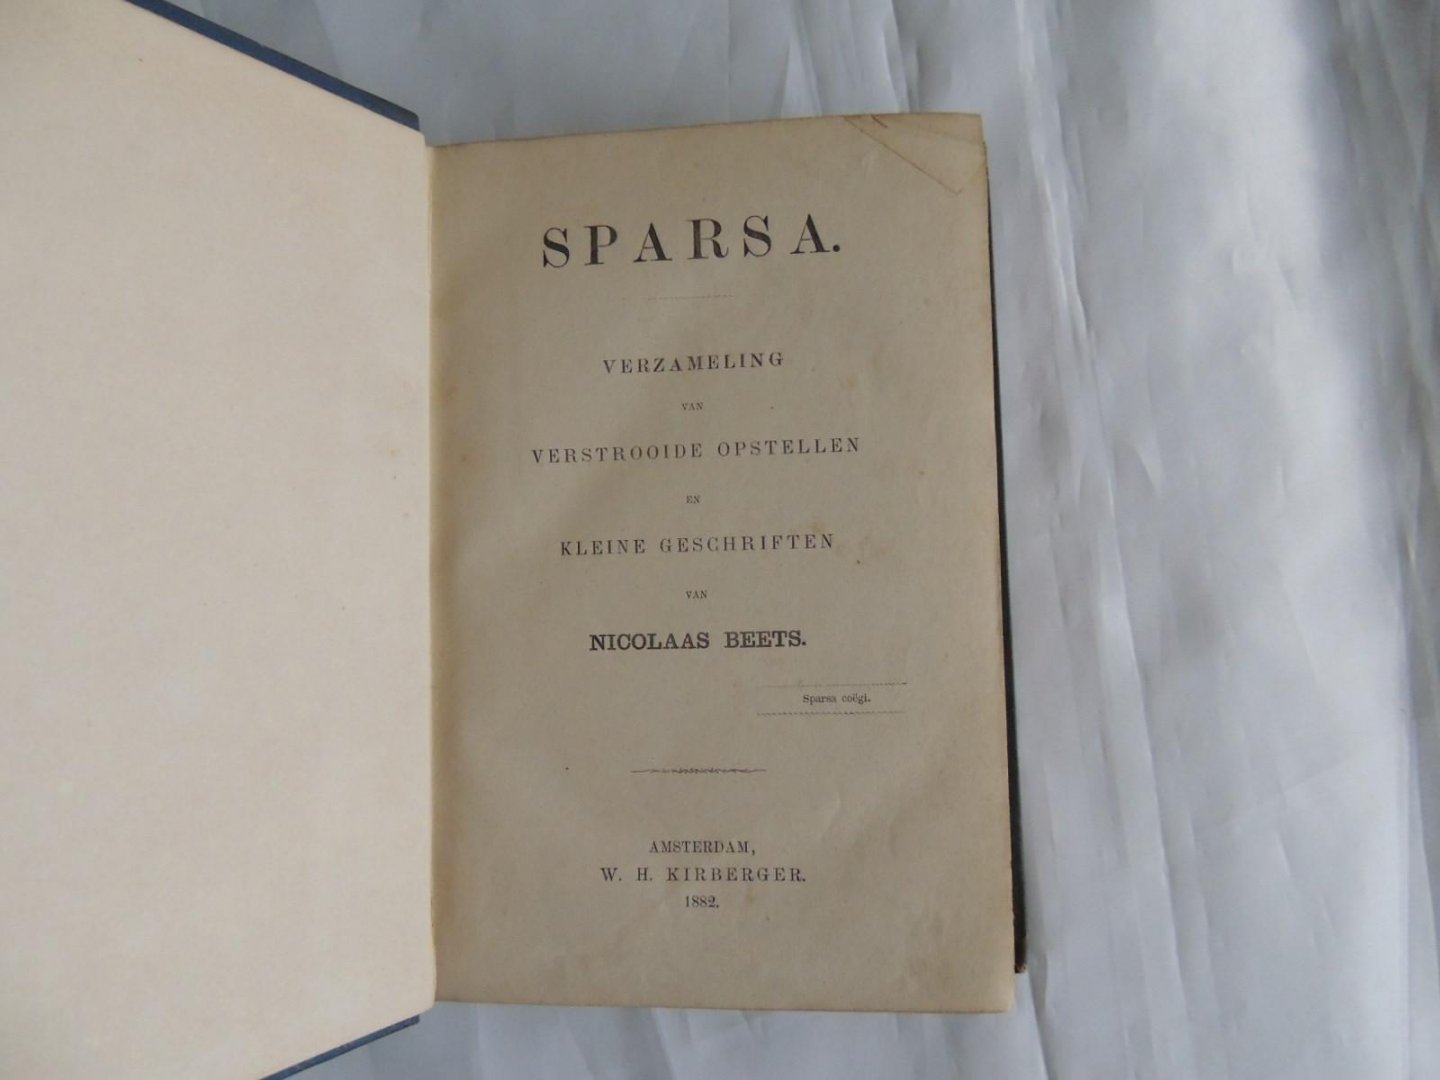 Beets Nicolaas - Sparsa, verzameling van verstrooide opstellen en kleine geschriften van Nicolaas Beets Sparsa coëgi